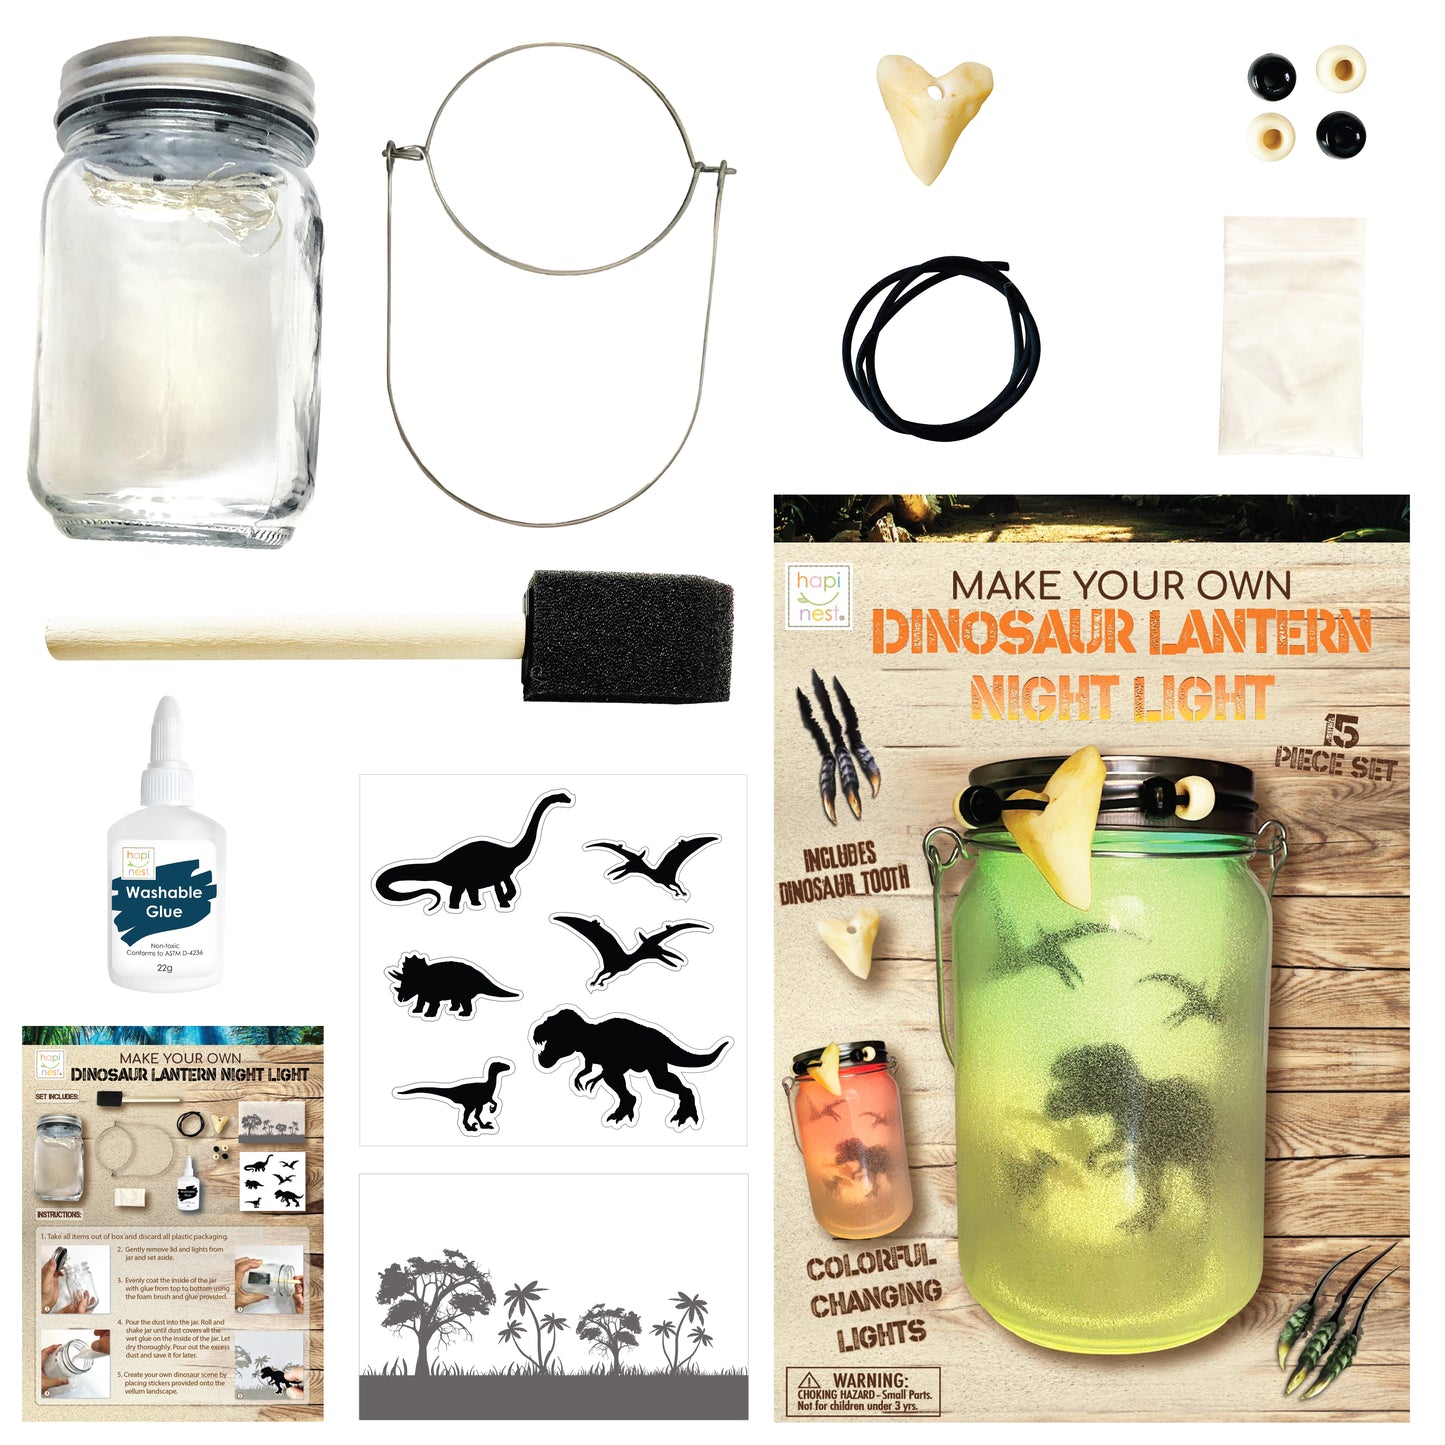 DIY Dinosaur Lantern Night Light - Craft Kit